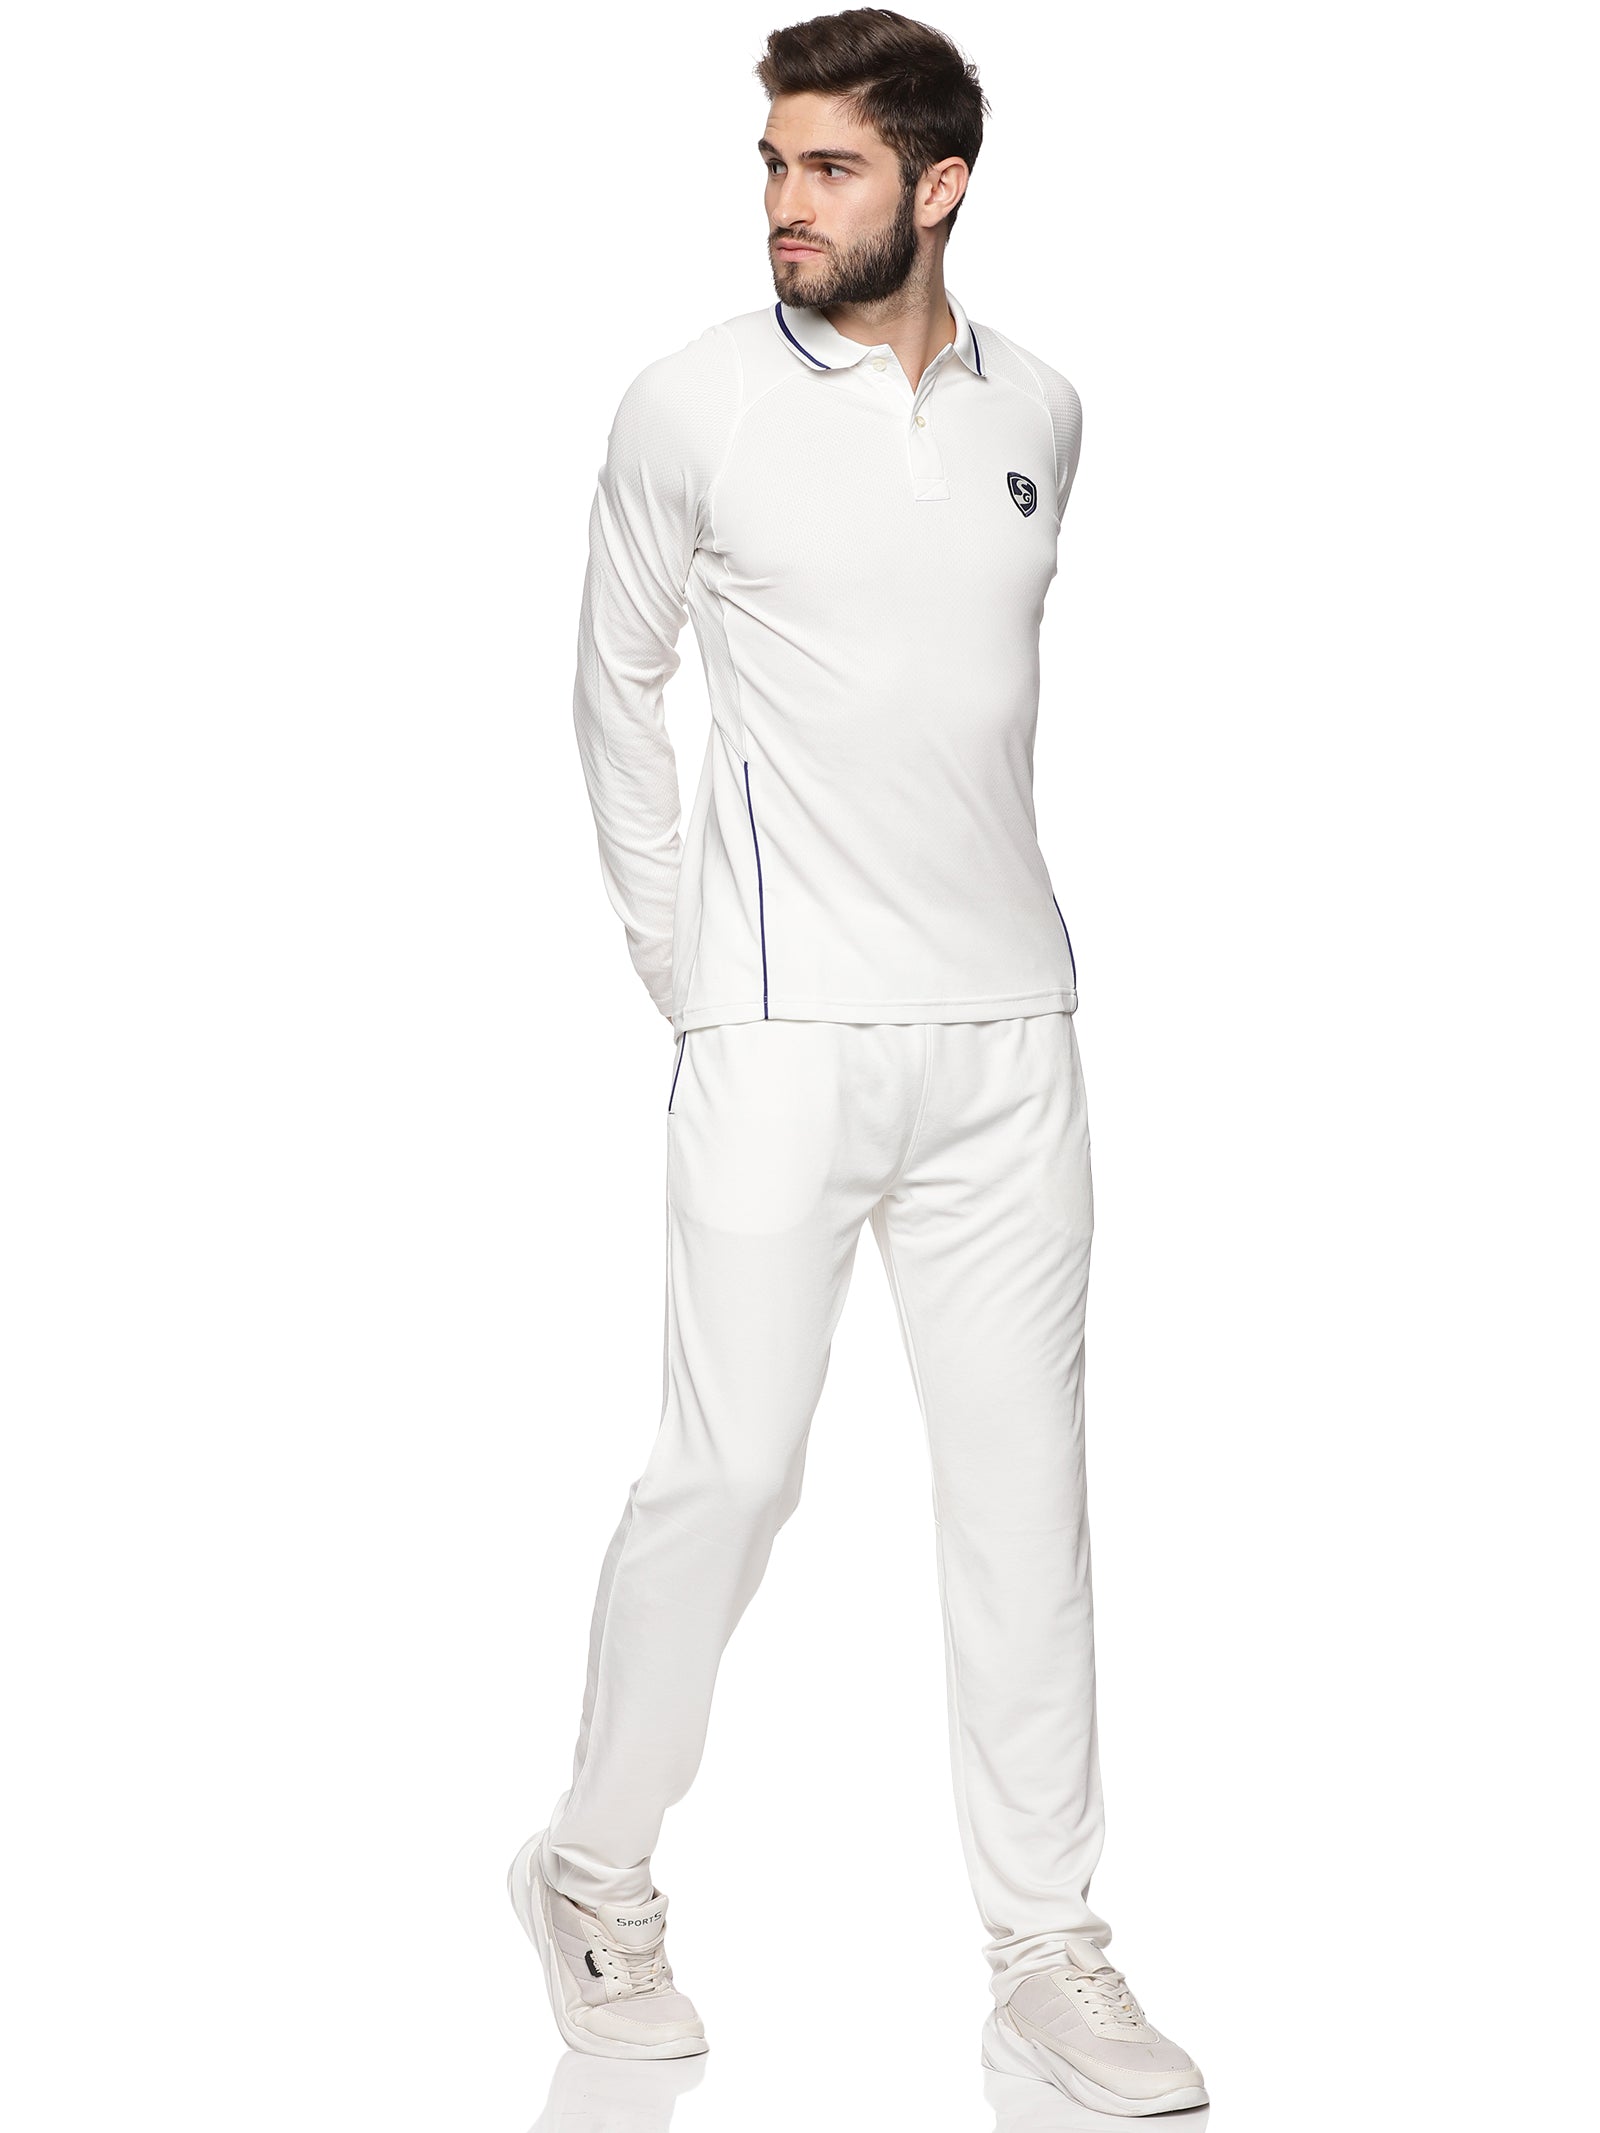 SG Premium Full Sleeves Cricket T-Shirt | All Sizes - Big Value Shop